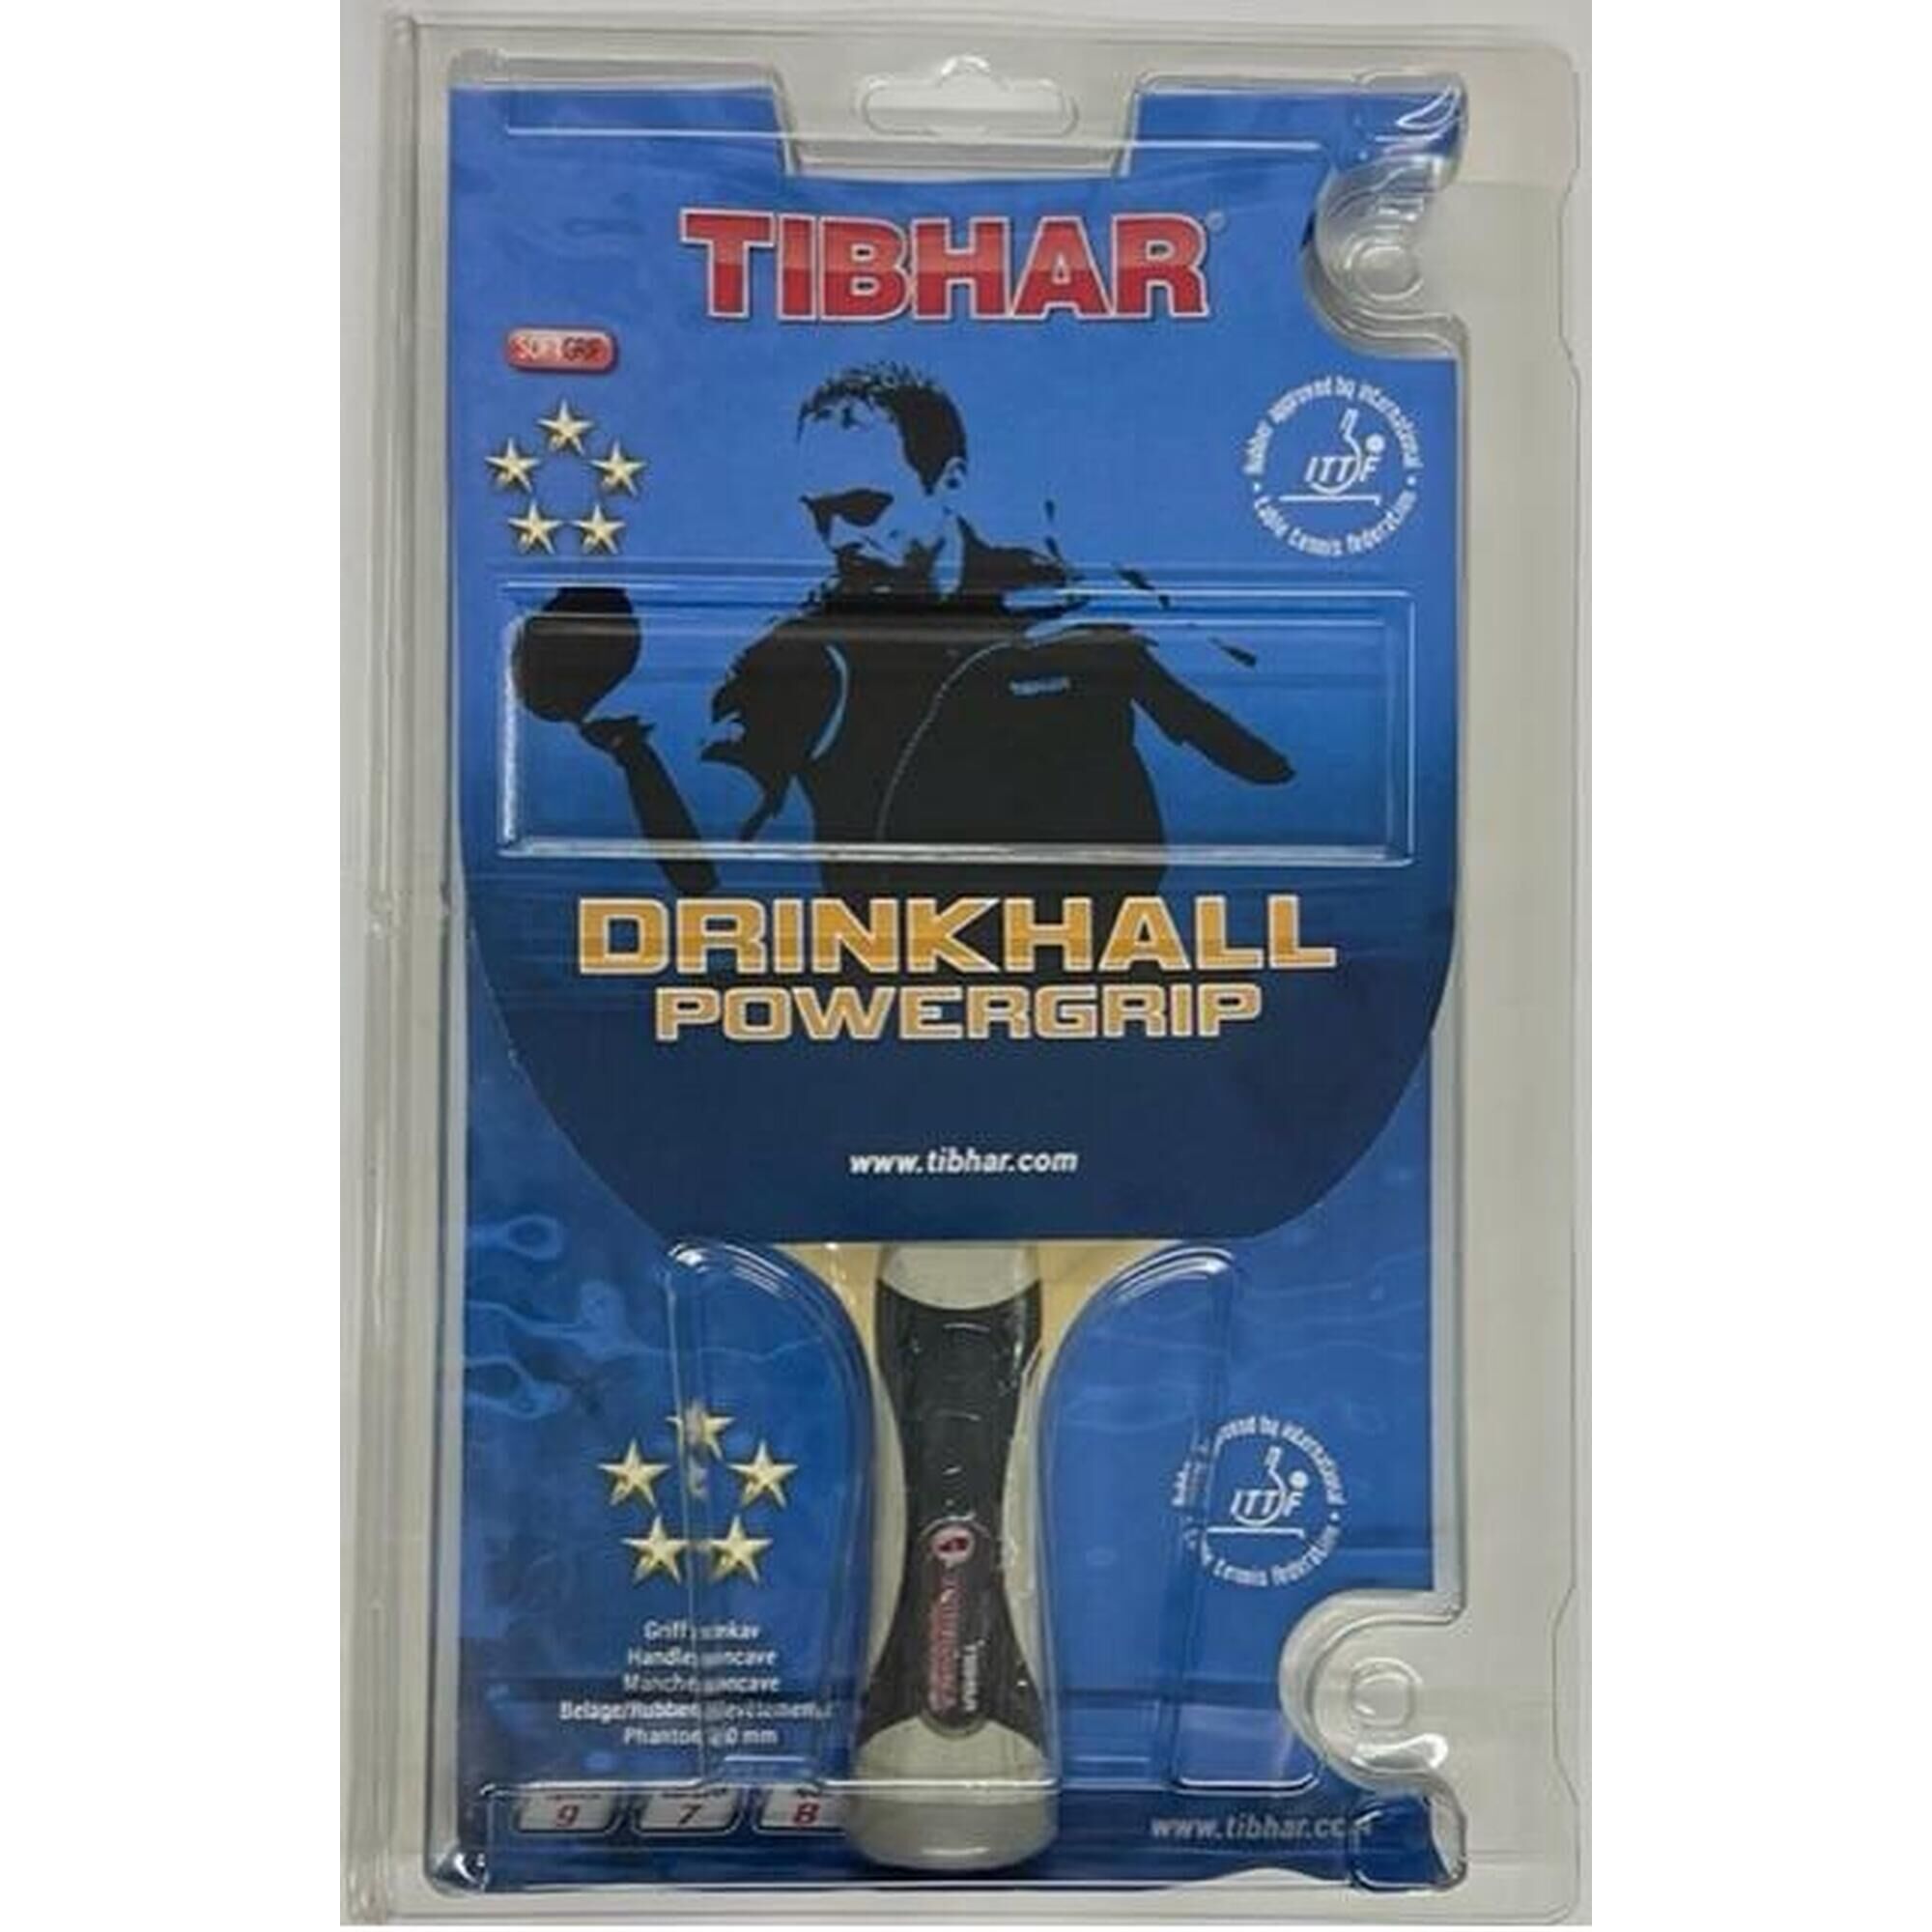 TIBHAR Tibhar Drinkhall Powergrip Table Tennis Bat